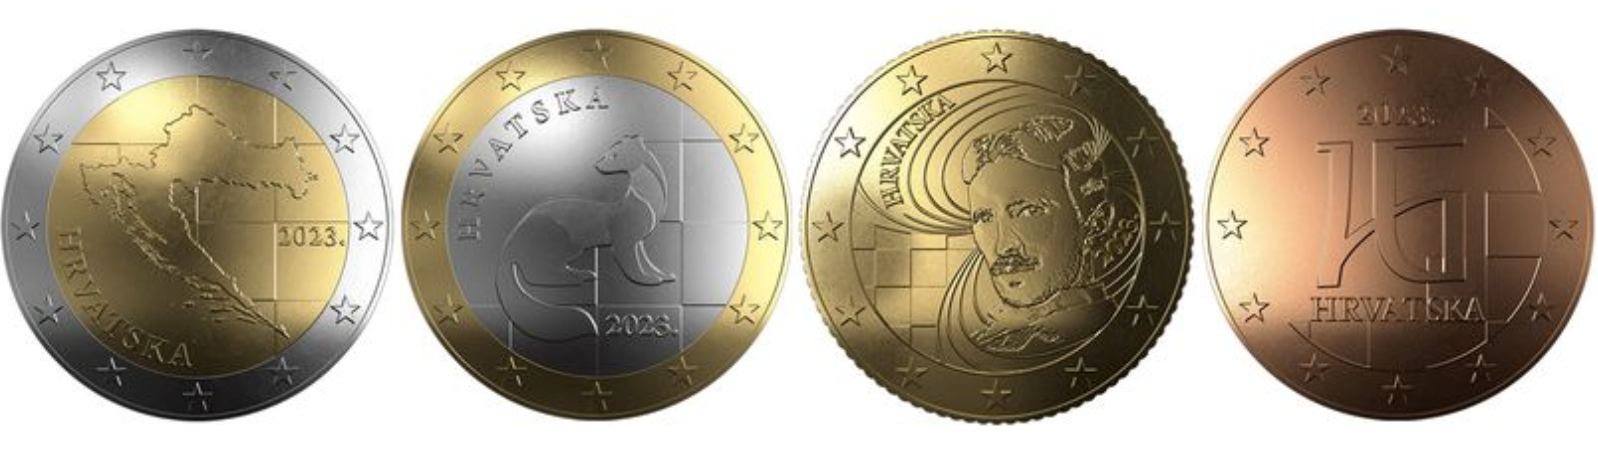 design of new Croatian Euro coins